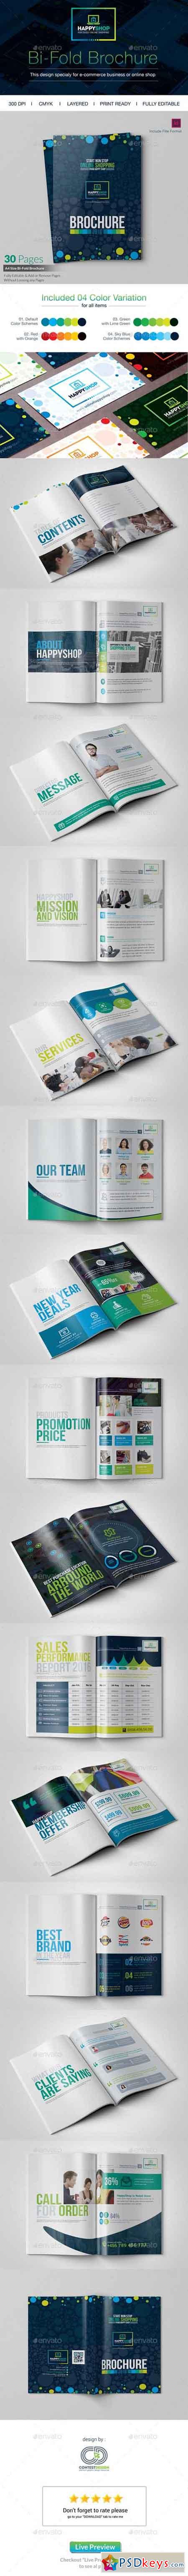 E-Commerce Promotional Bi-Fold Brochure 14464632